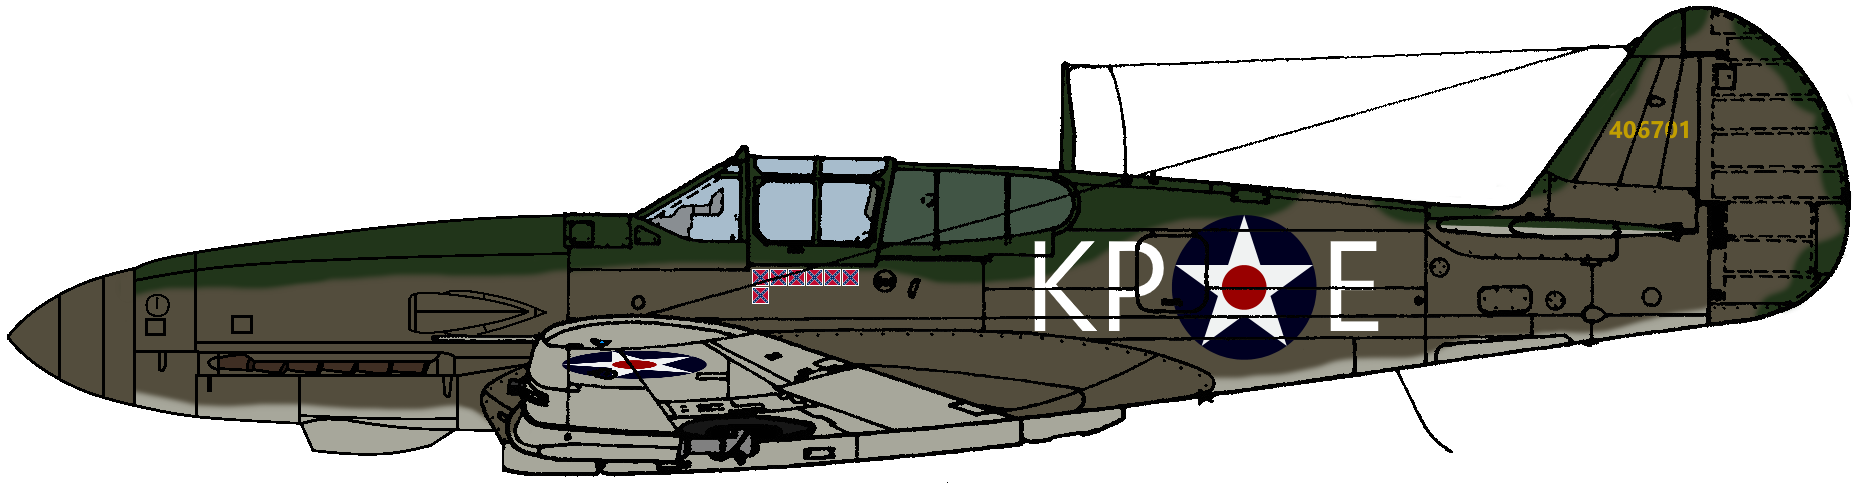 P-27K.png